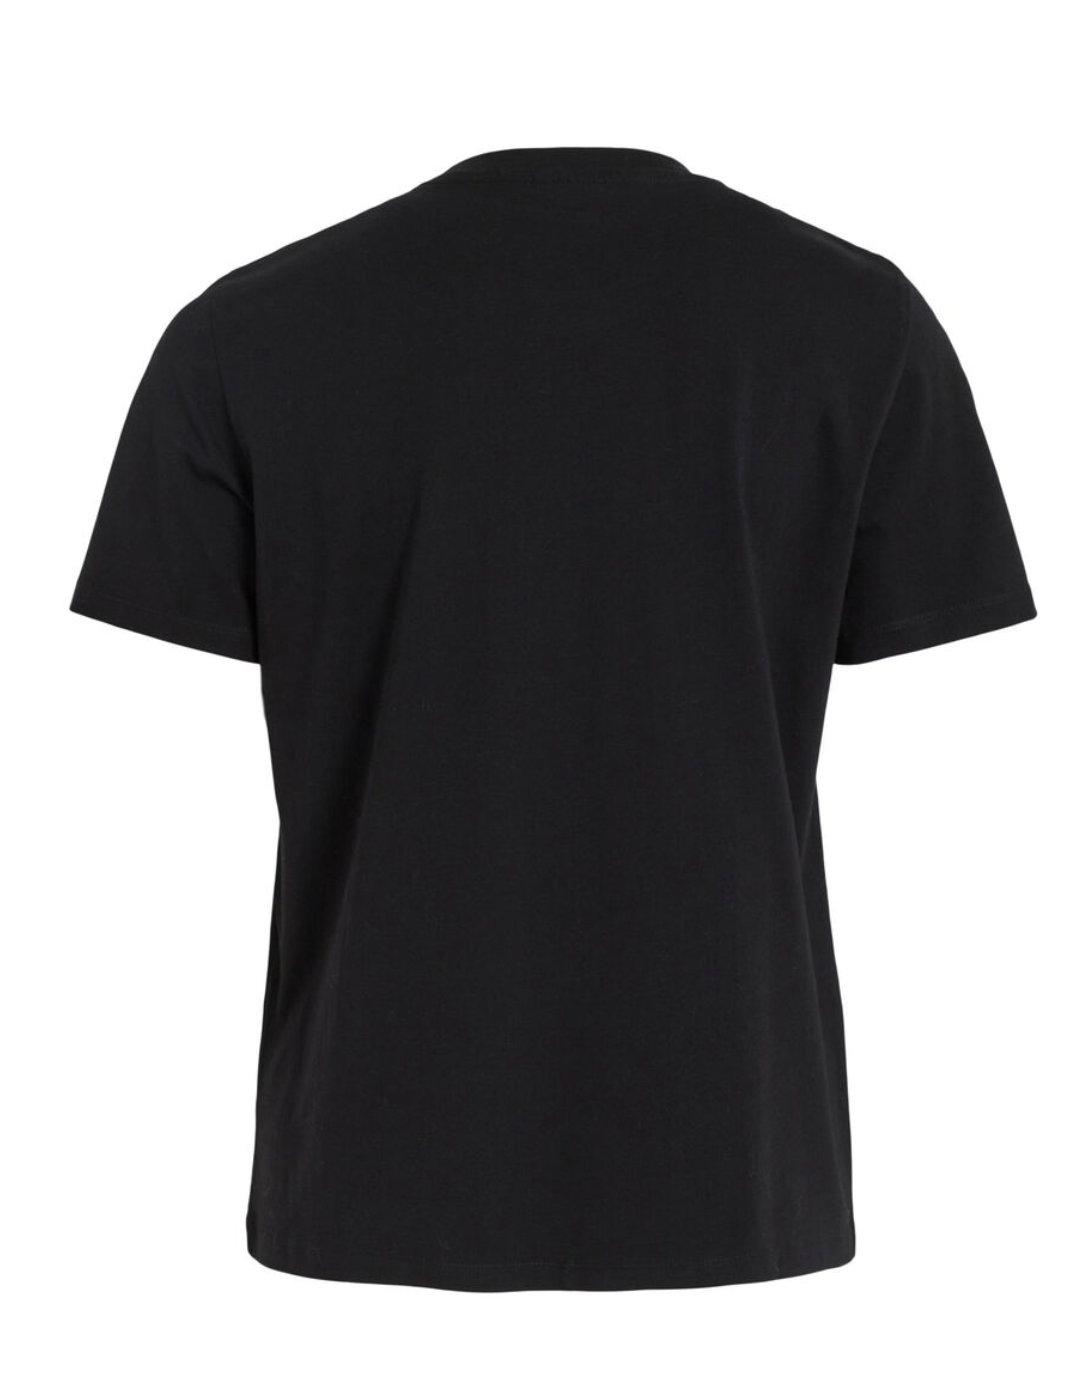 Camiseta Vila Bil negro manga corta para mujer